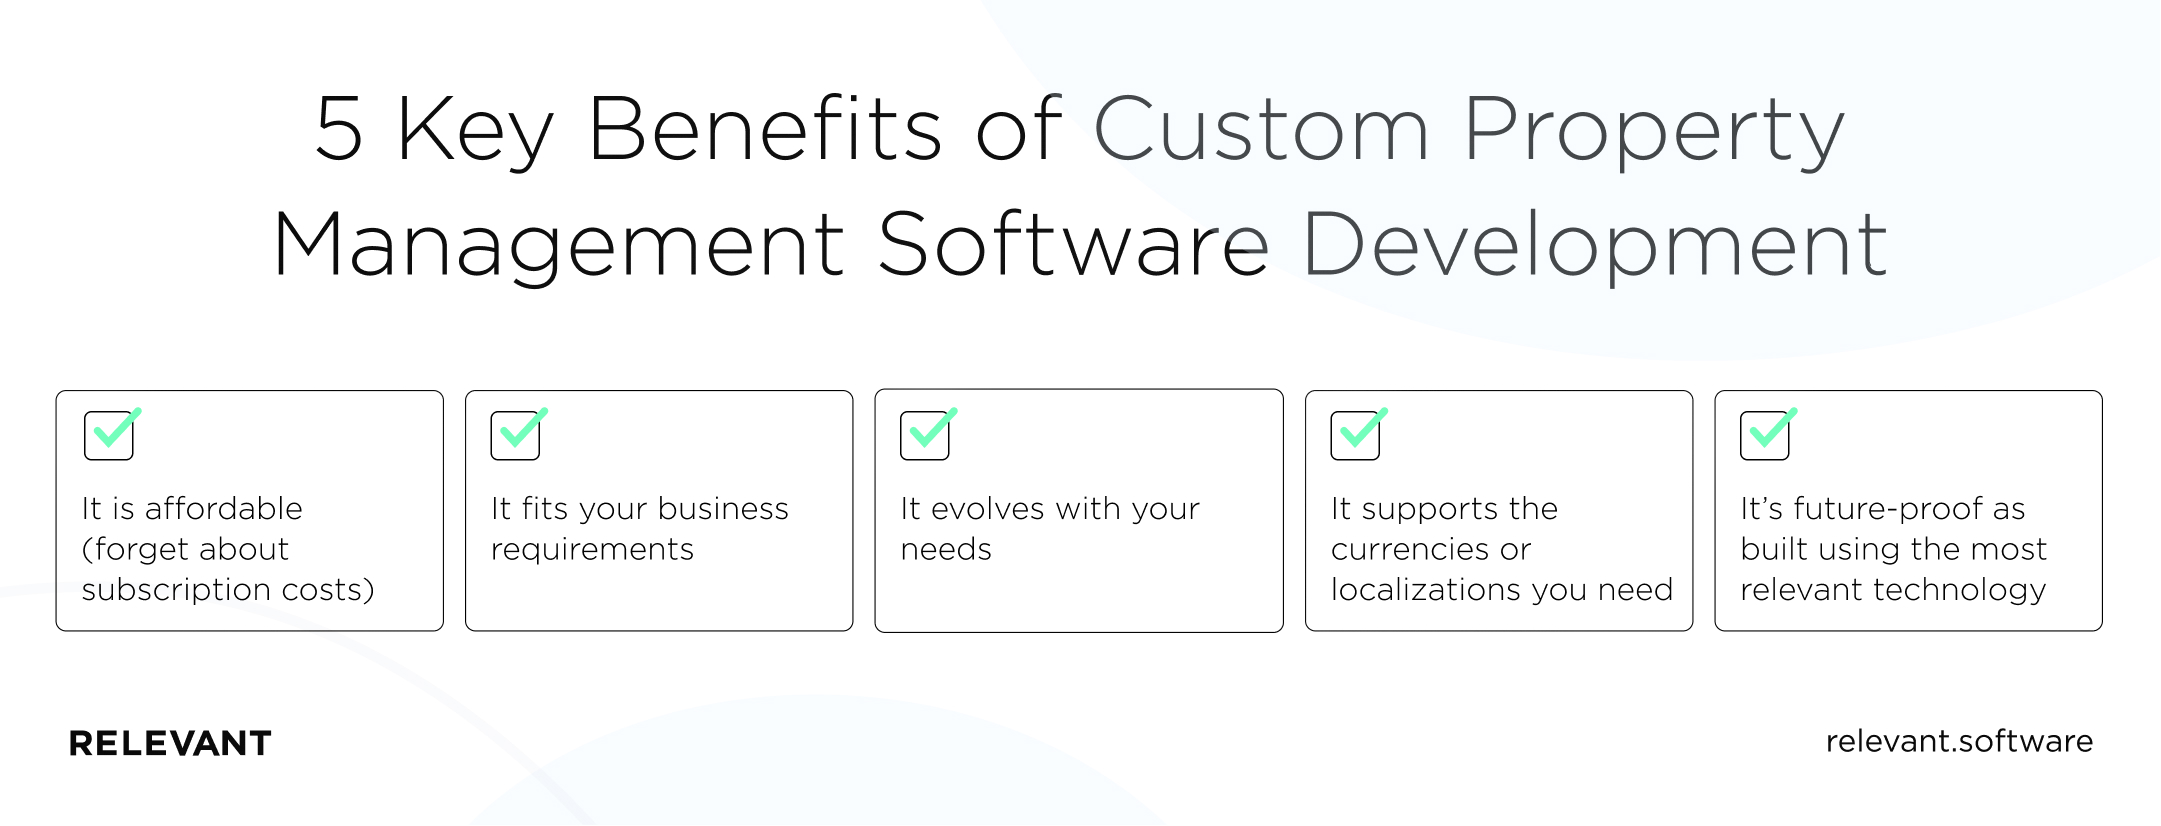 5 Key Benefits of Custom Property Management Software Development